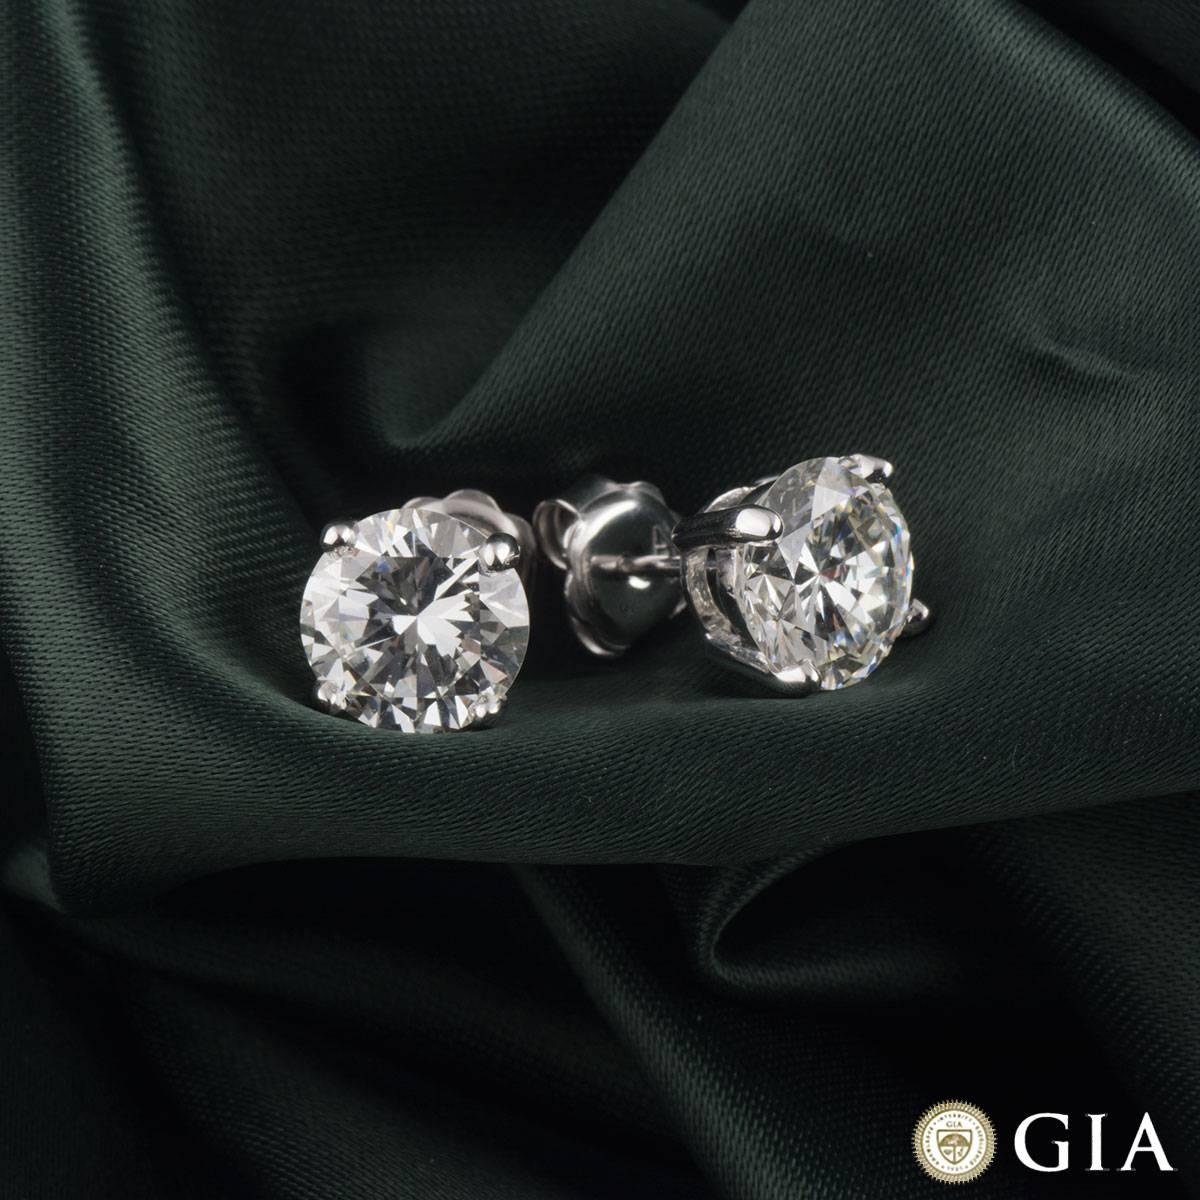 Women's GIA Certified Diamond Stud Earrings Total 5.12 carats